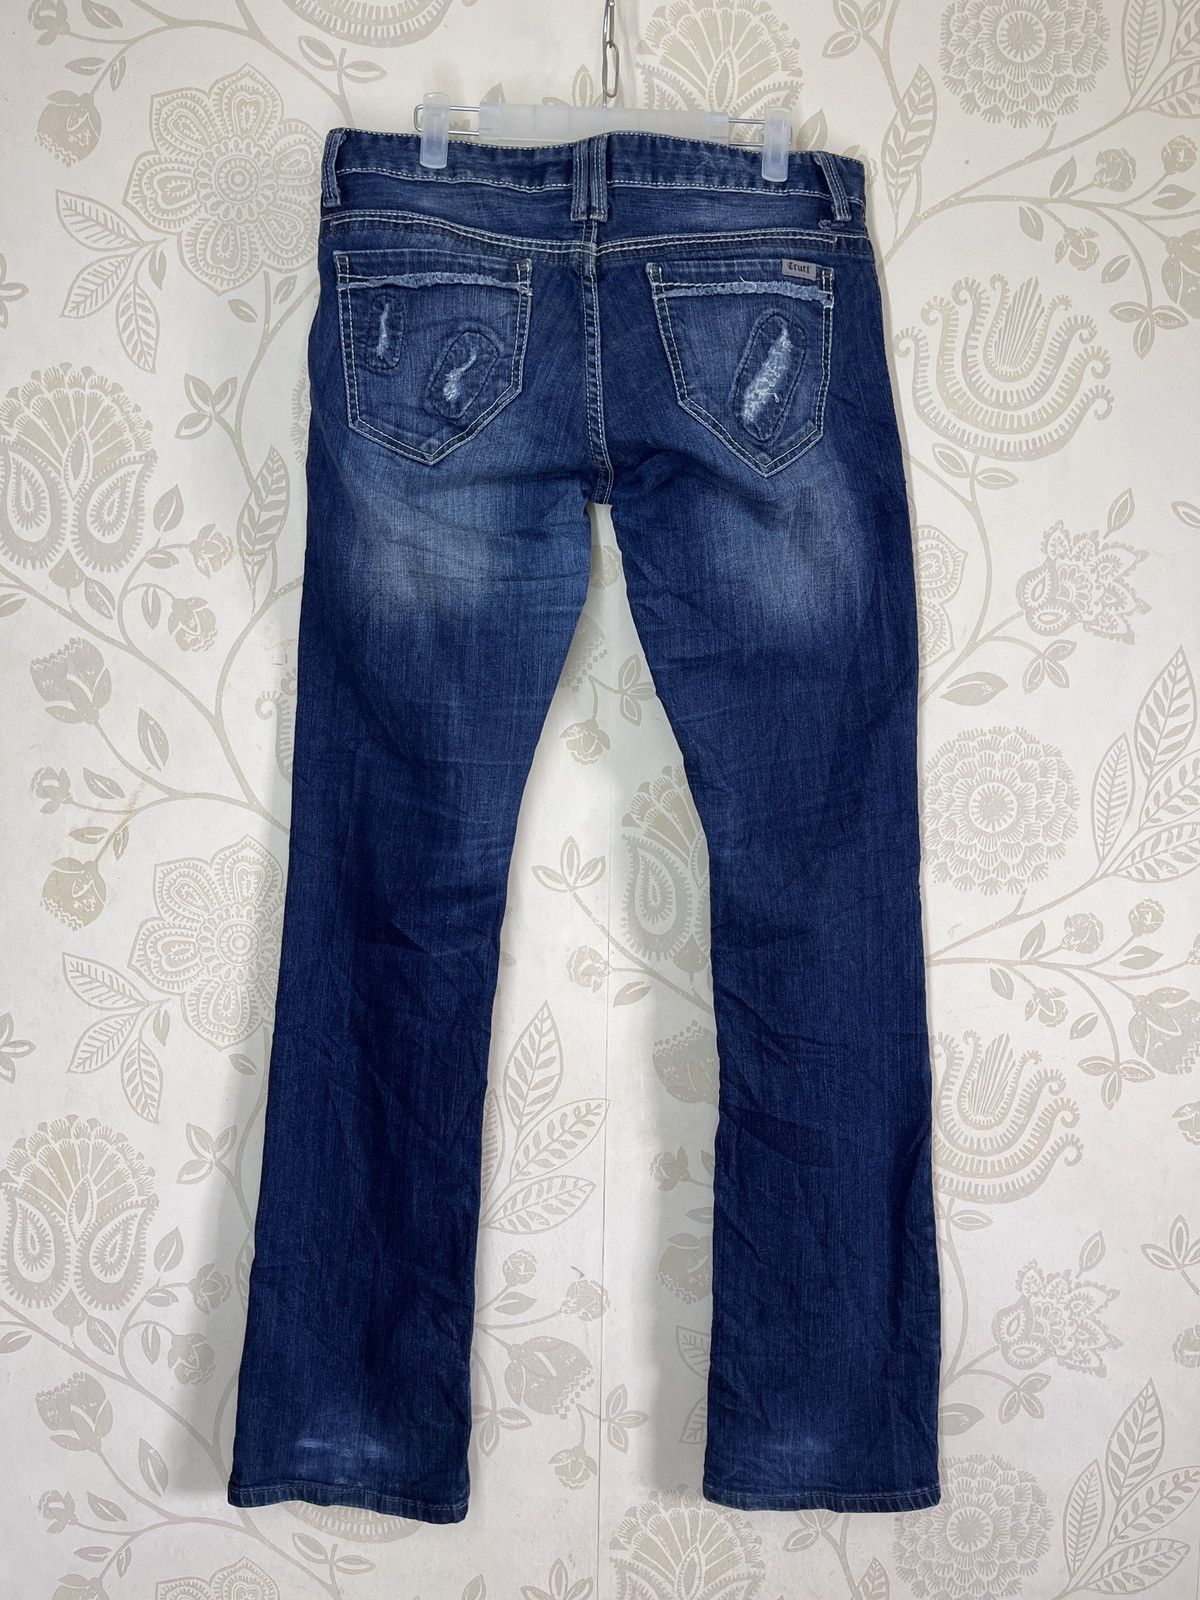 Vintage - Cruel Denim Blake Rocky Mountain Jeans Distressed - 2